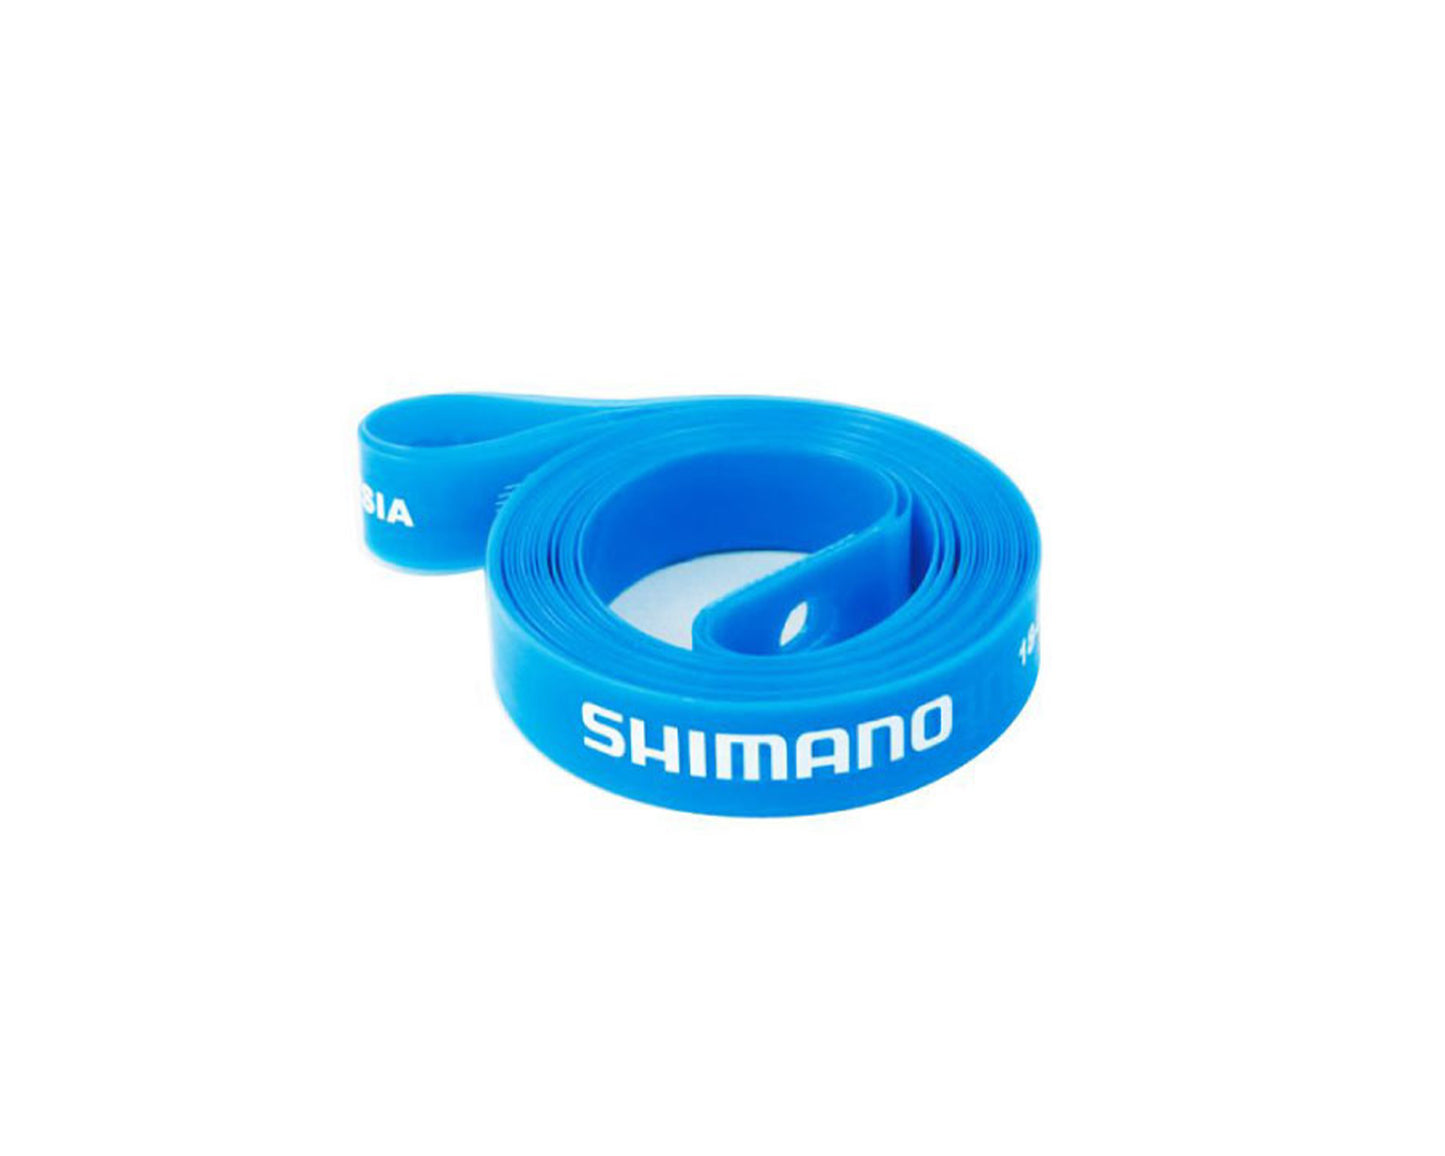 Shimano Rim Tape For Road Type 700c 18mm